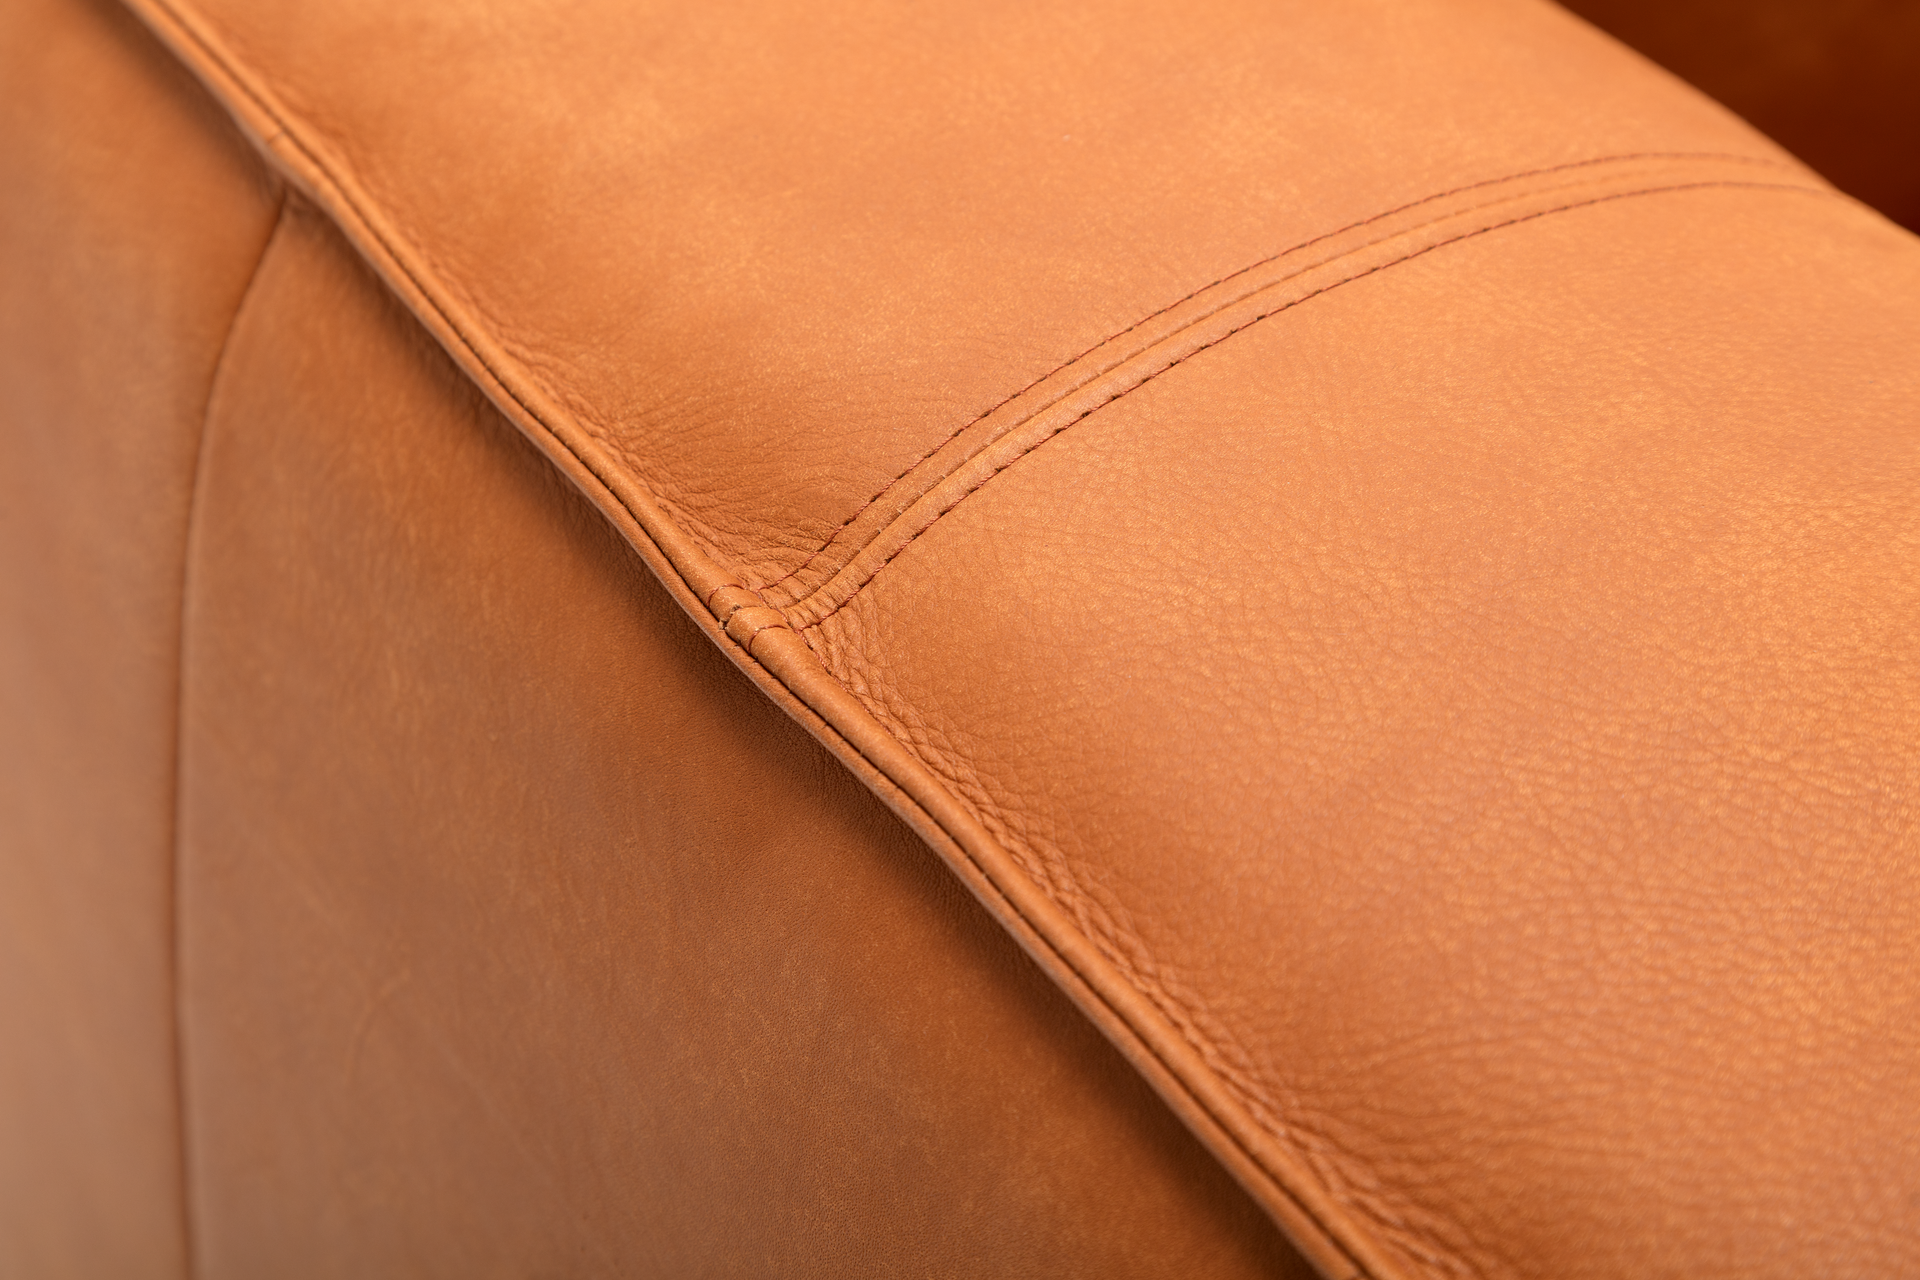 Freistil Rolf Benz 136 sofa leather detail